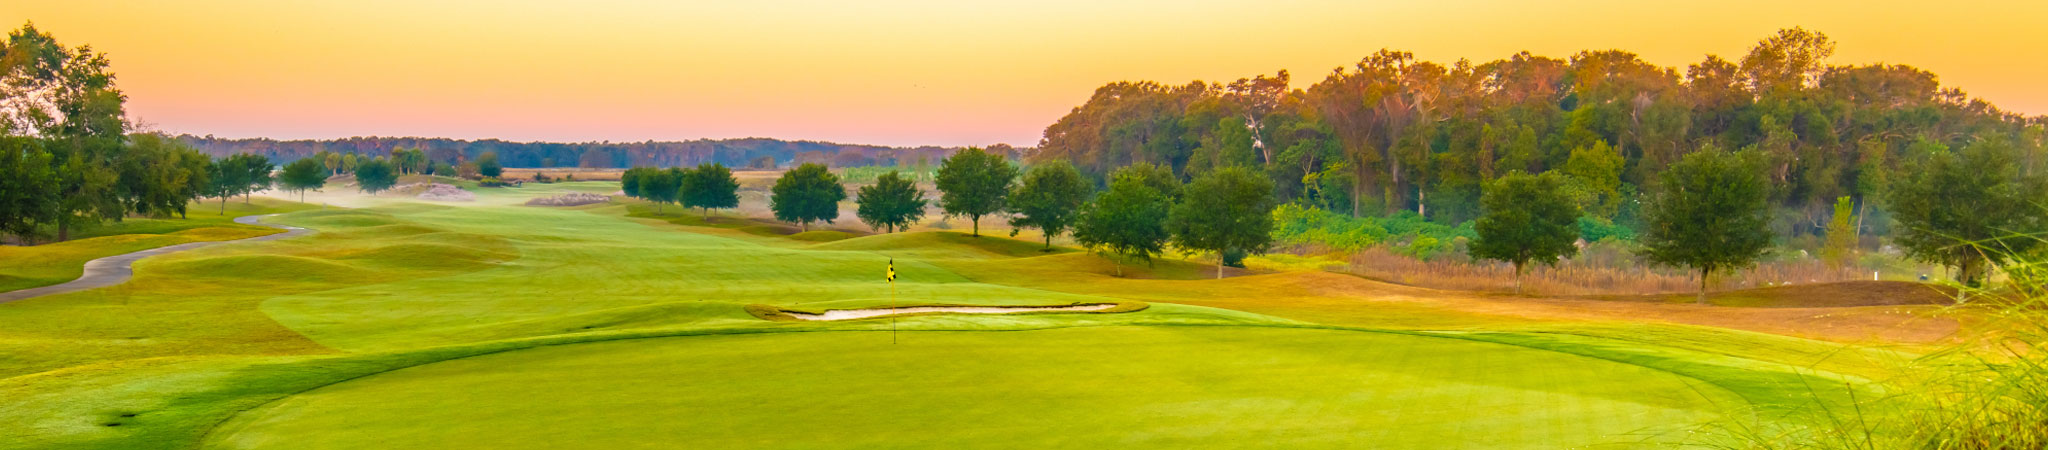 Stone Creek Golf Course in Ocala, FL